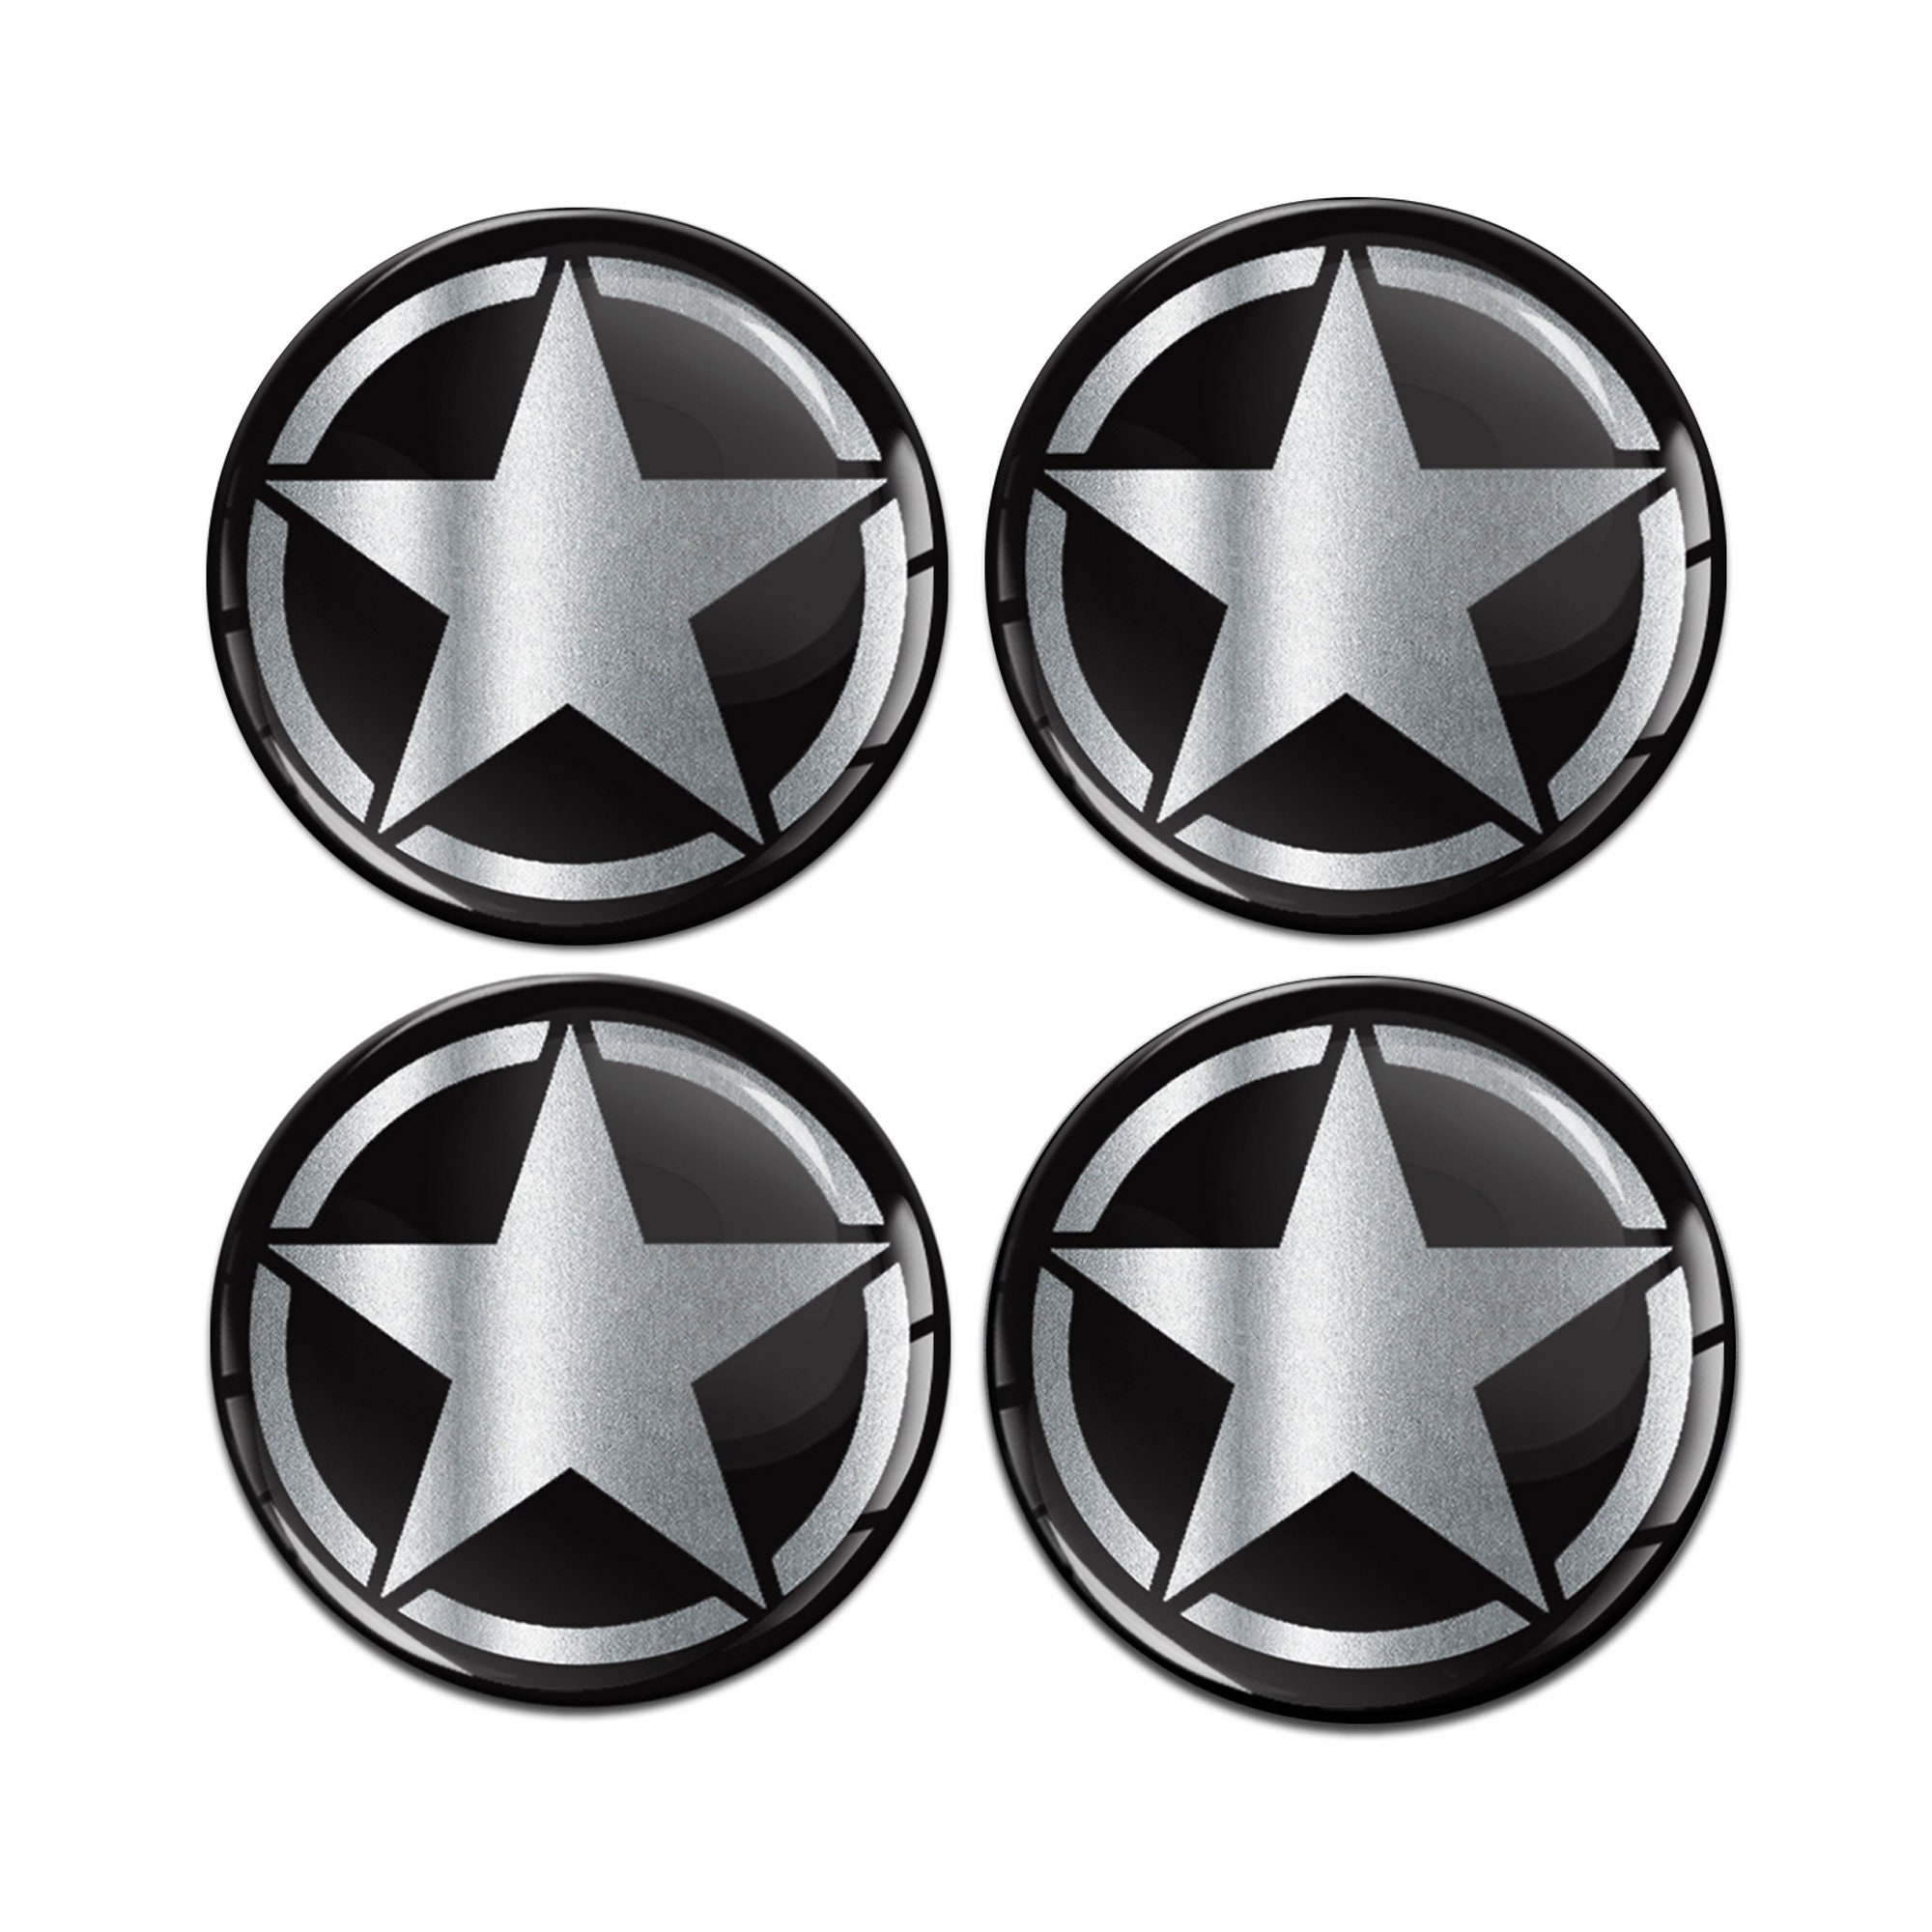 50mm SILIKON embleme TOYOTA, rad mitte aufkleber Radkappen logo